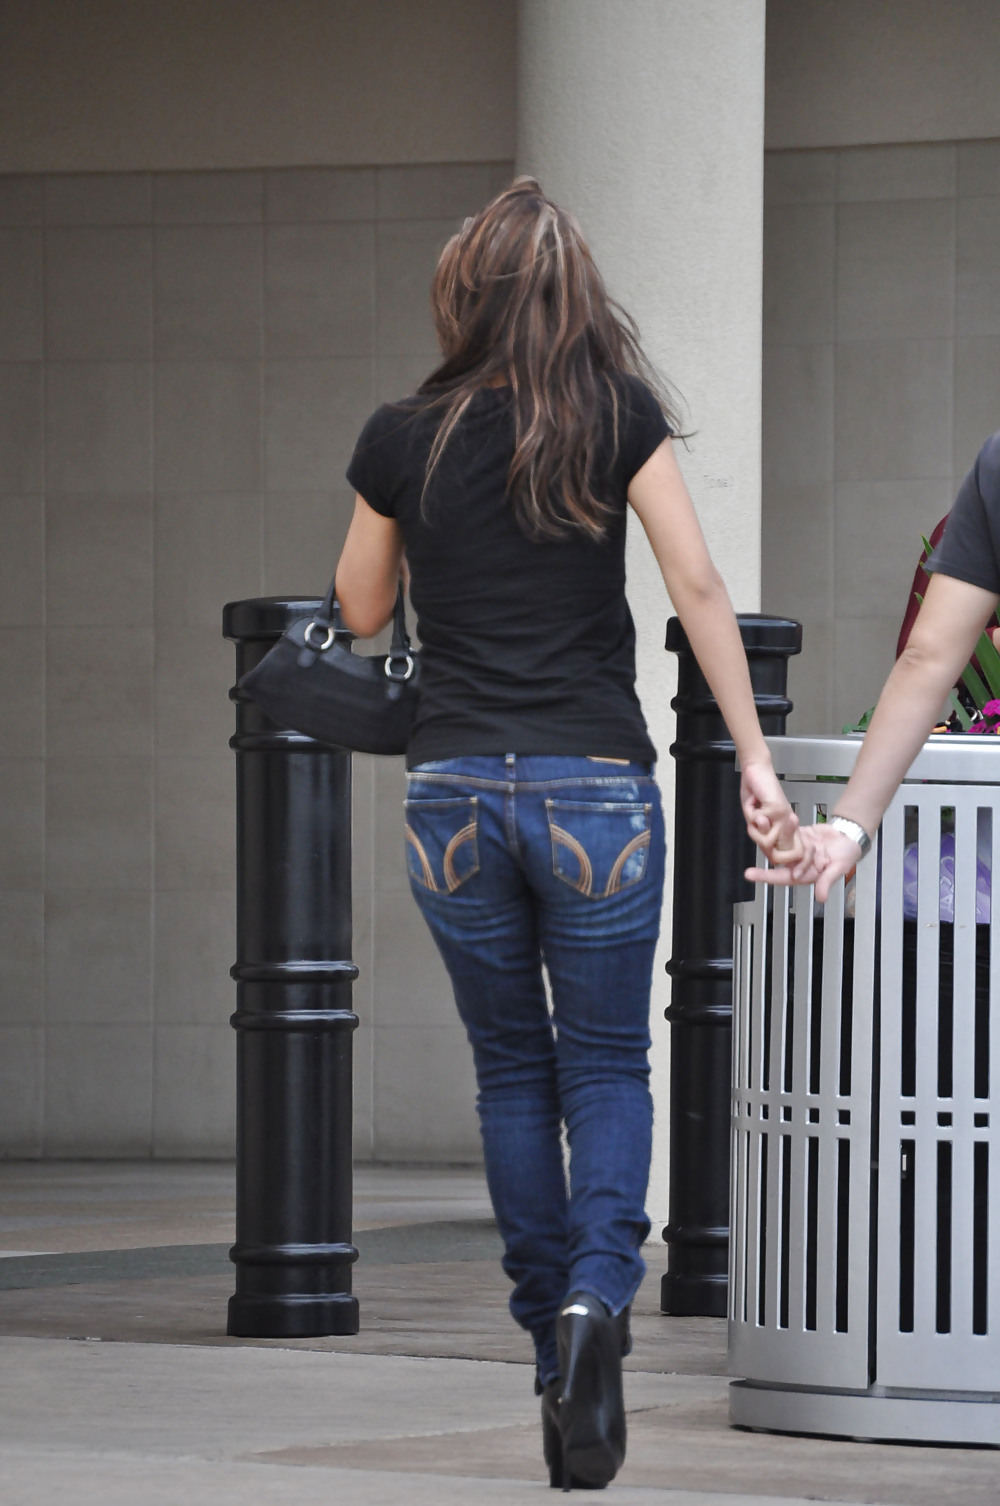 Tight jeans in public #4268065